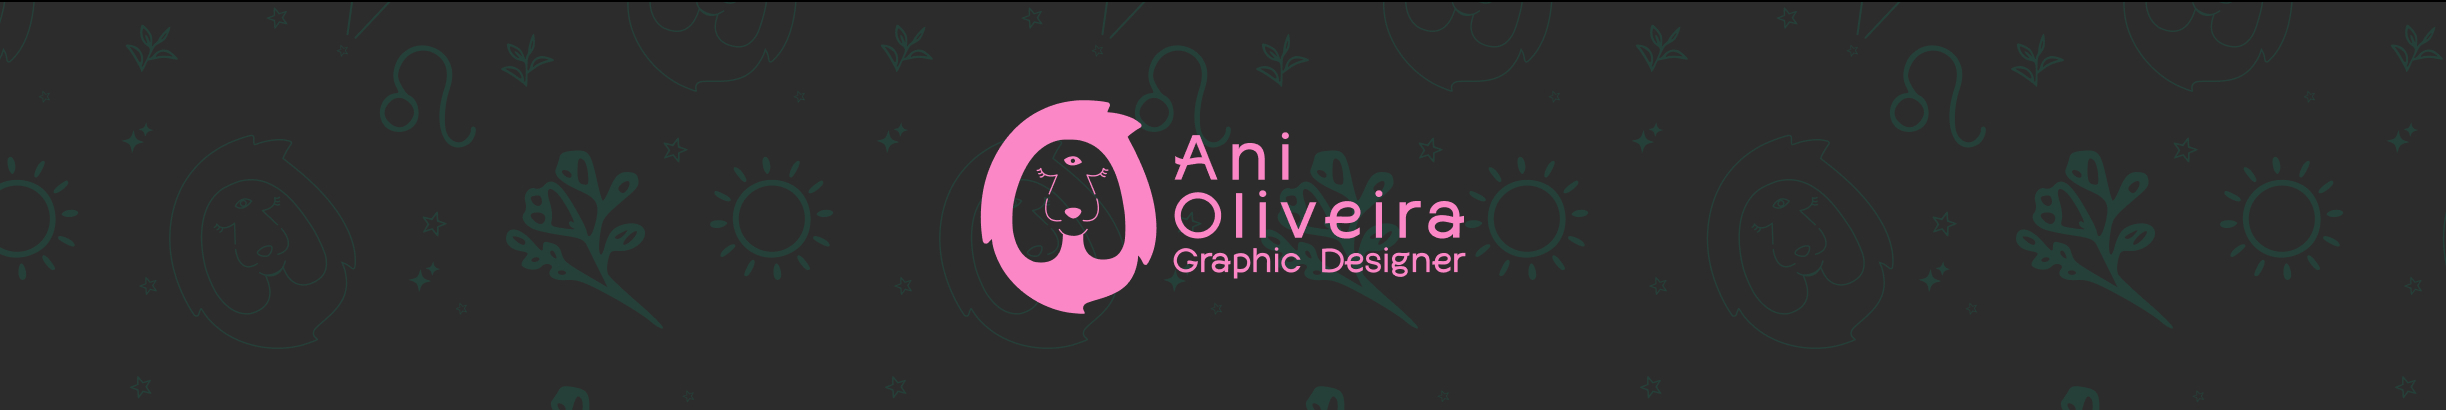 Ani Oliveiras profilbanner